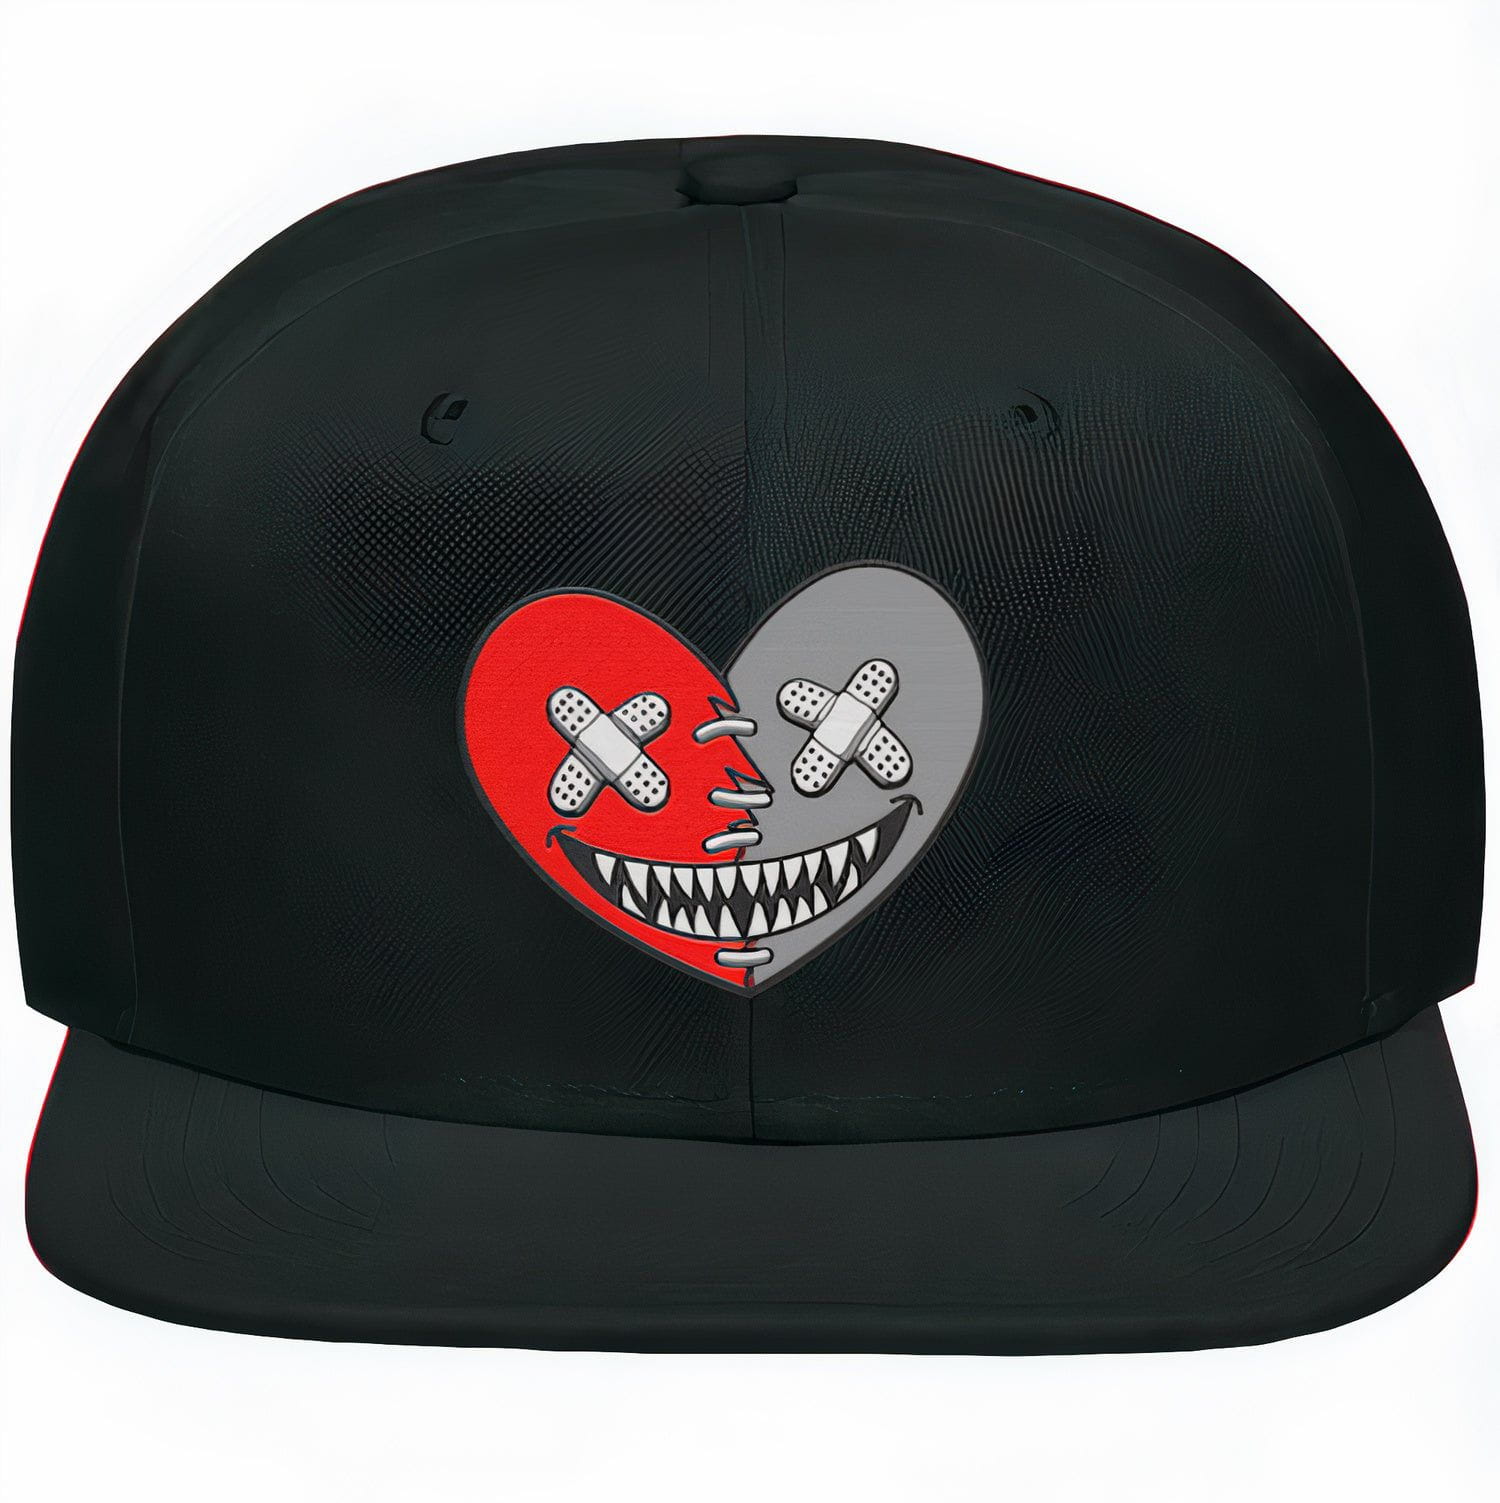 Bred 4s Snapback Hat - Jordan 4 Bred Reimagined Hats - Heart